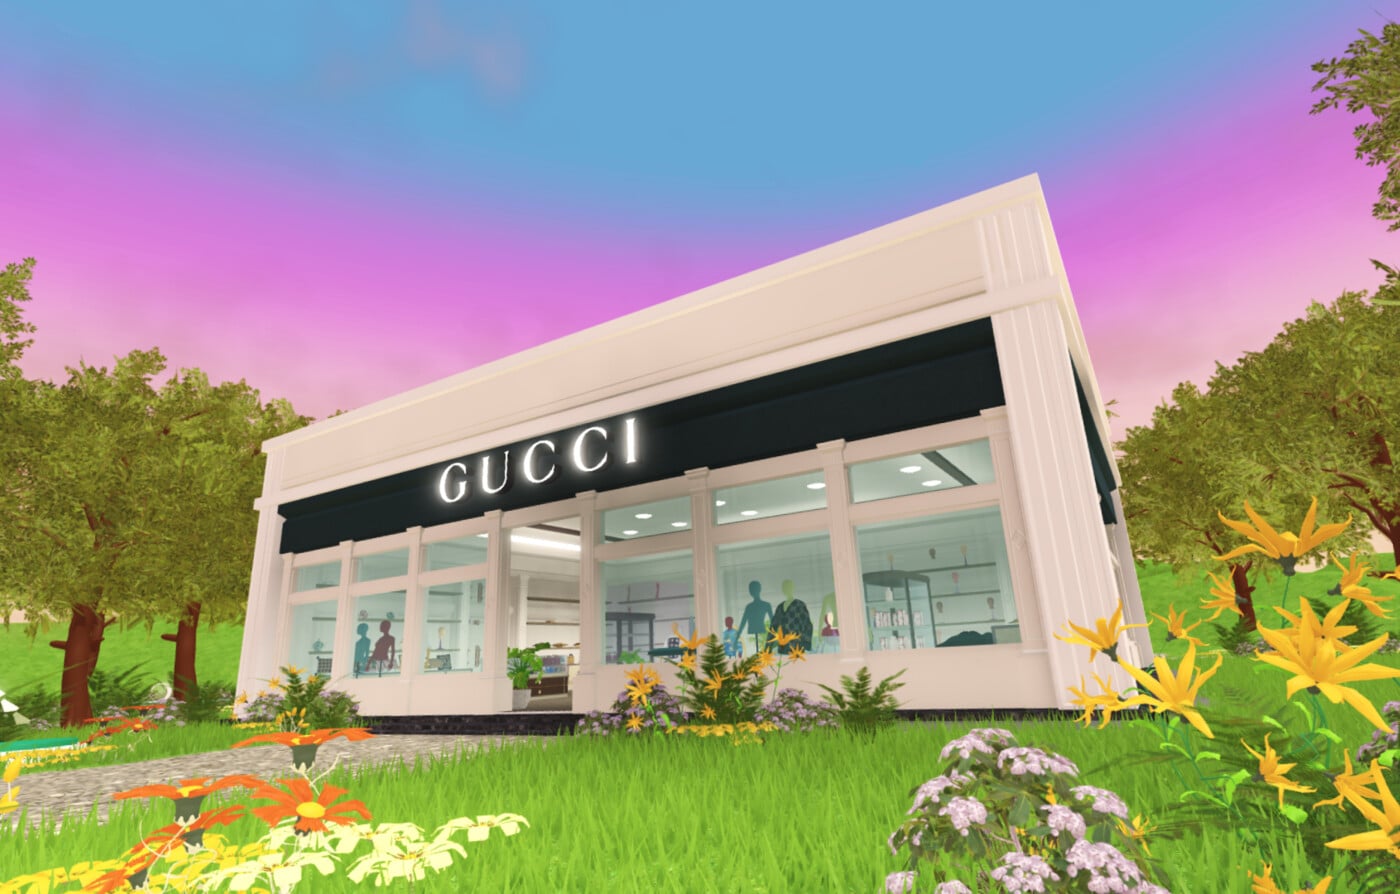 Gucci在游戏平台 Roblox上建了一座虚拟“Gucci小镇”